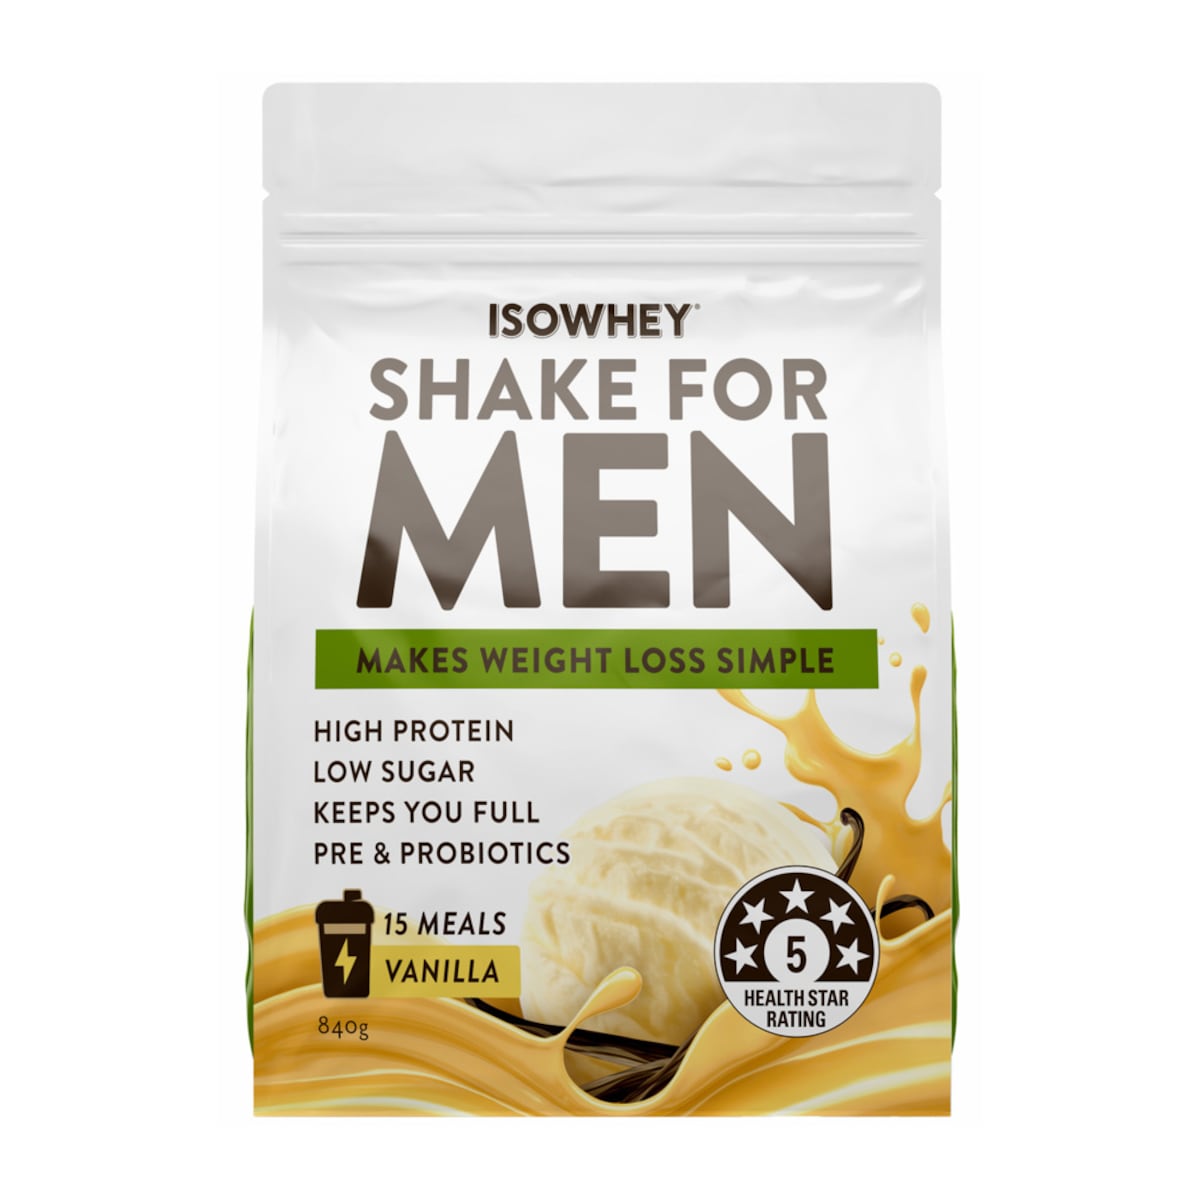 IsoWhey Men's Shake Vanilla 840g Australia